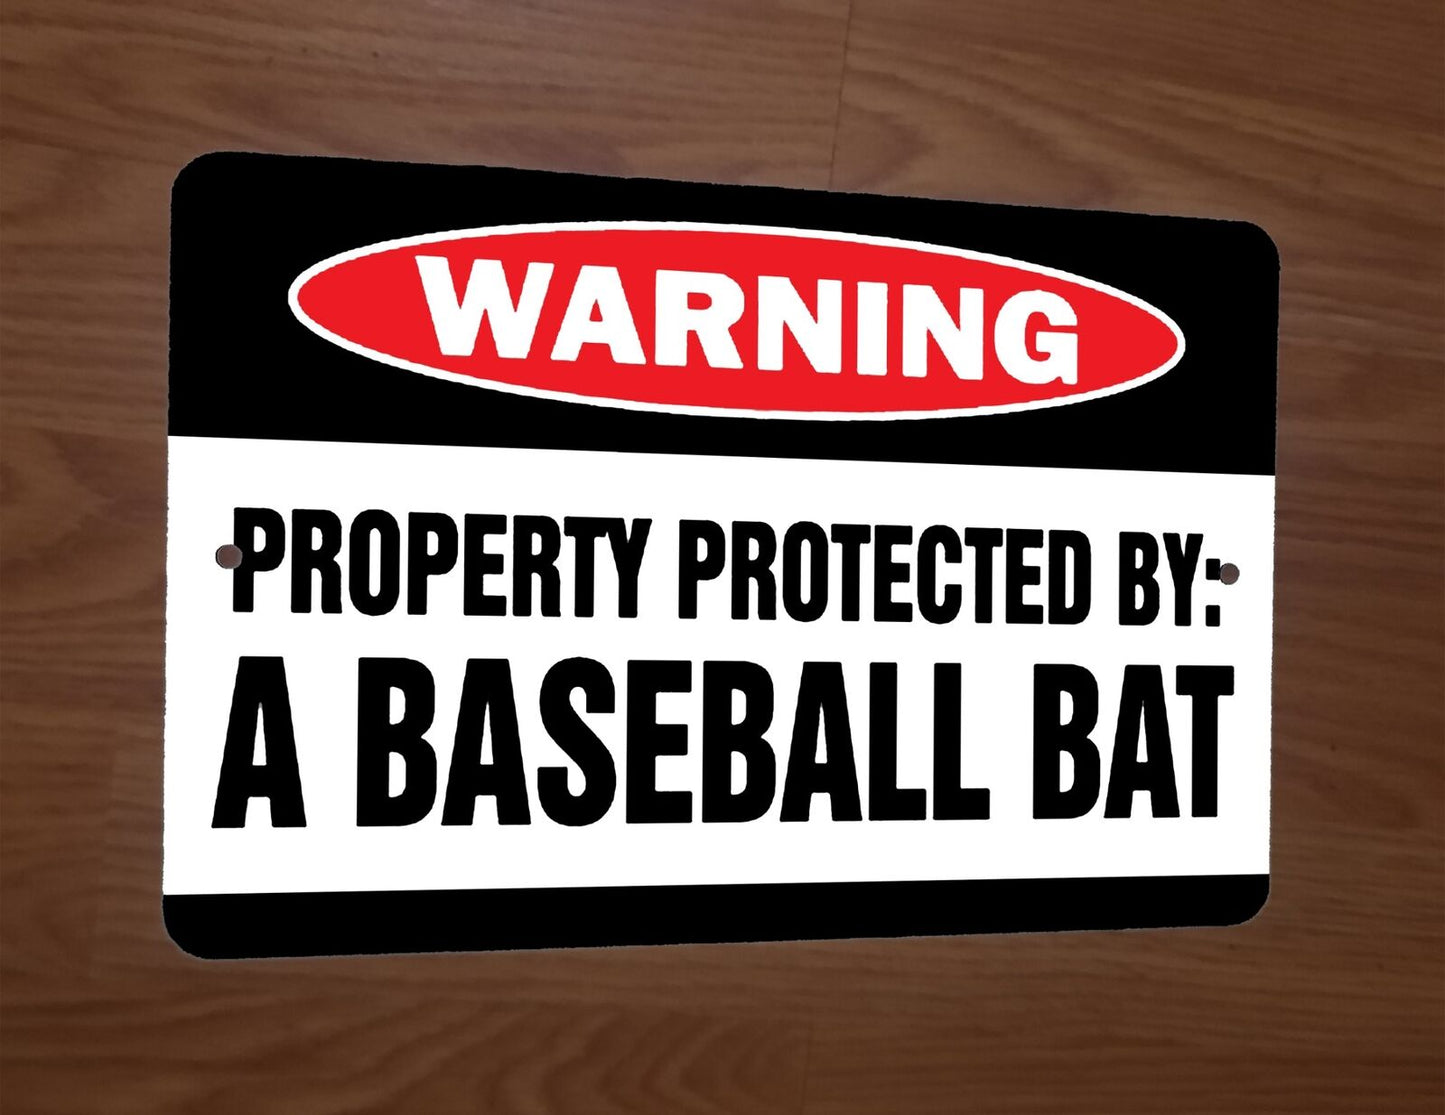 Warning Property Protected By a Baseball Bat 8x12 Metal Wall Sign Poster